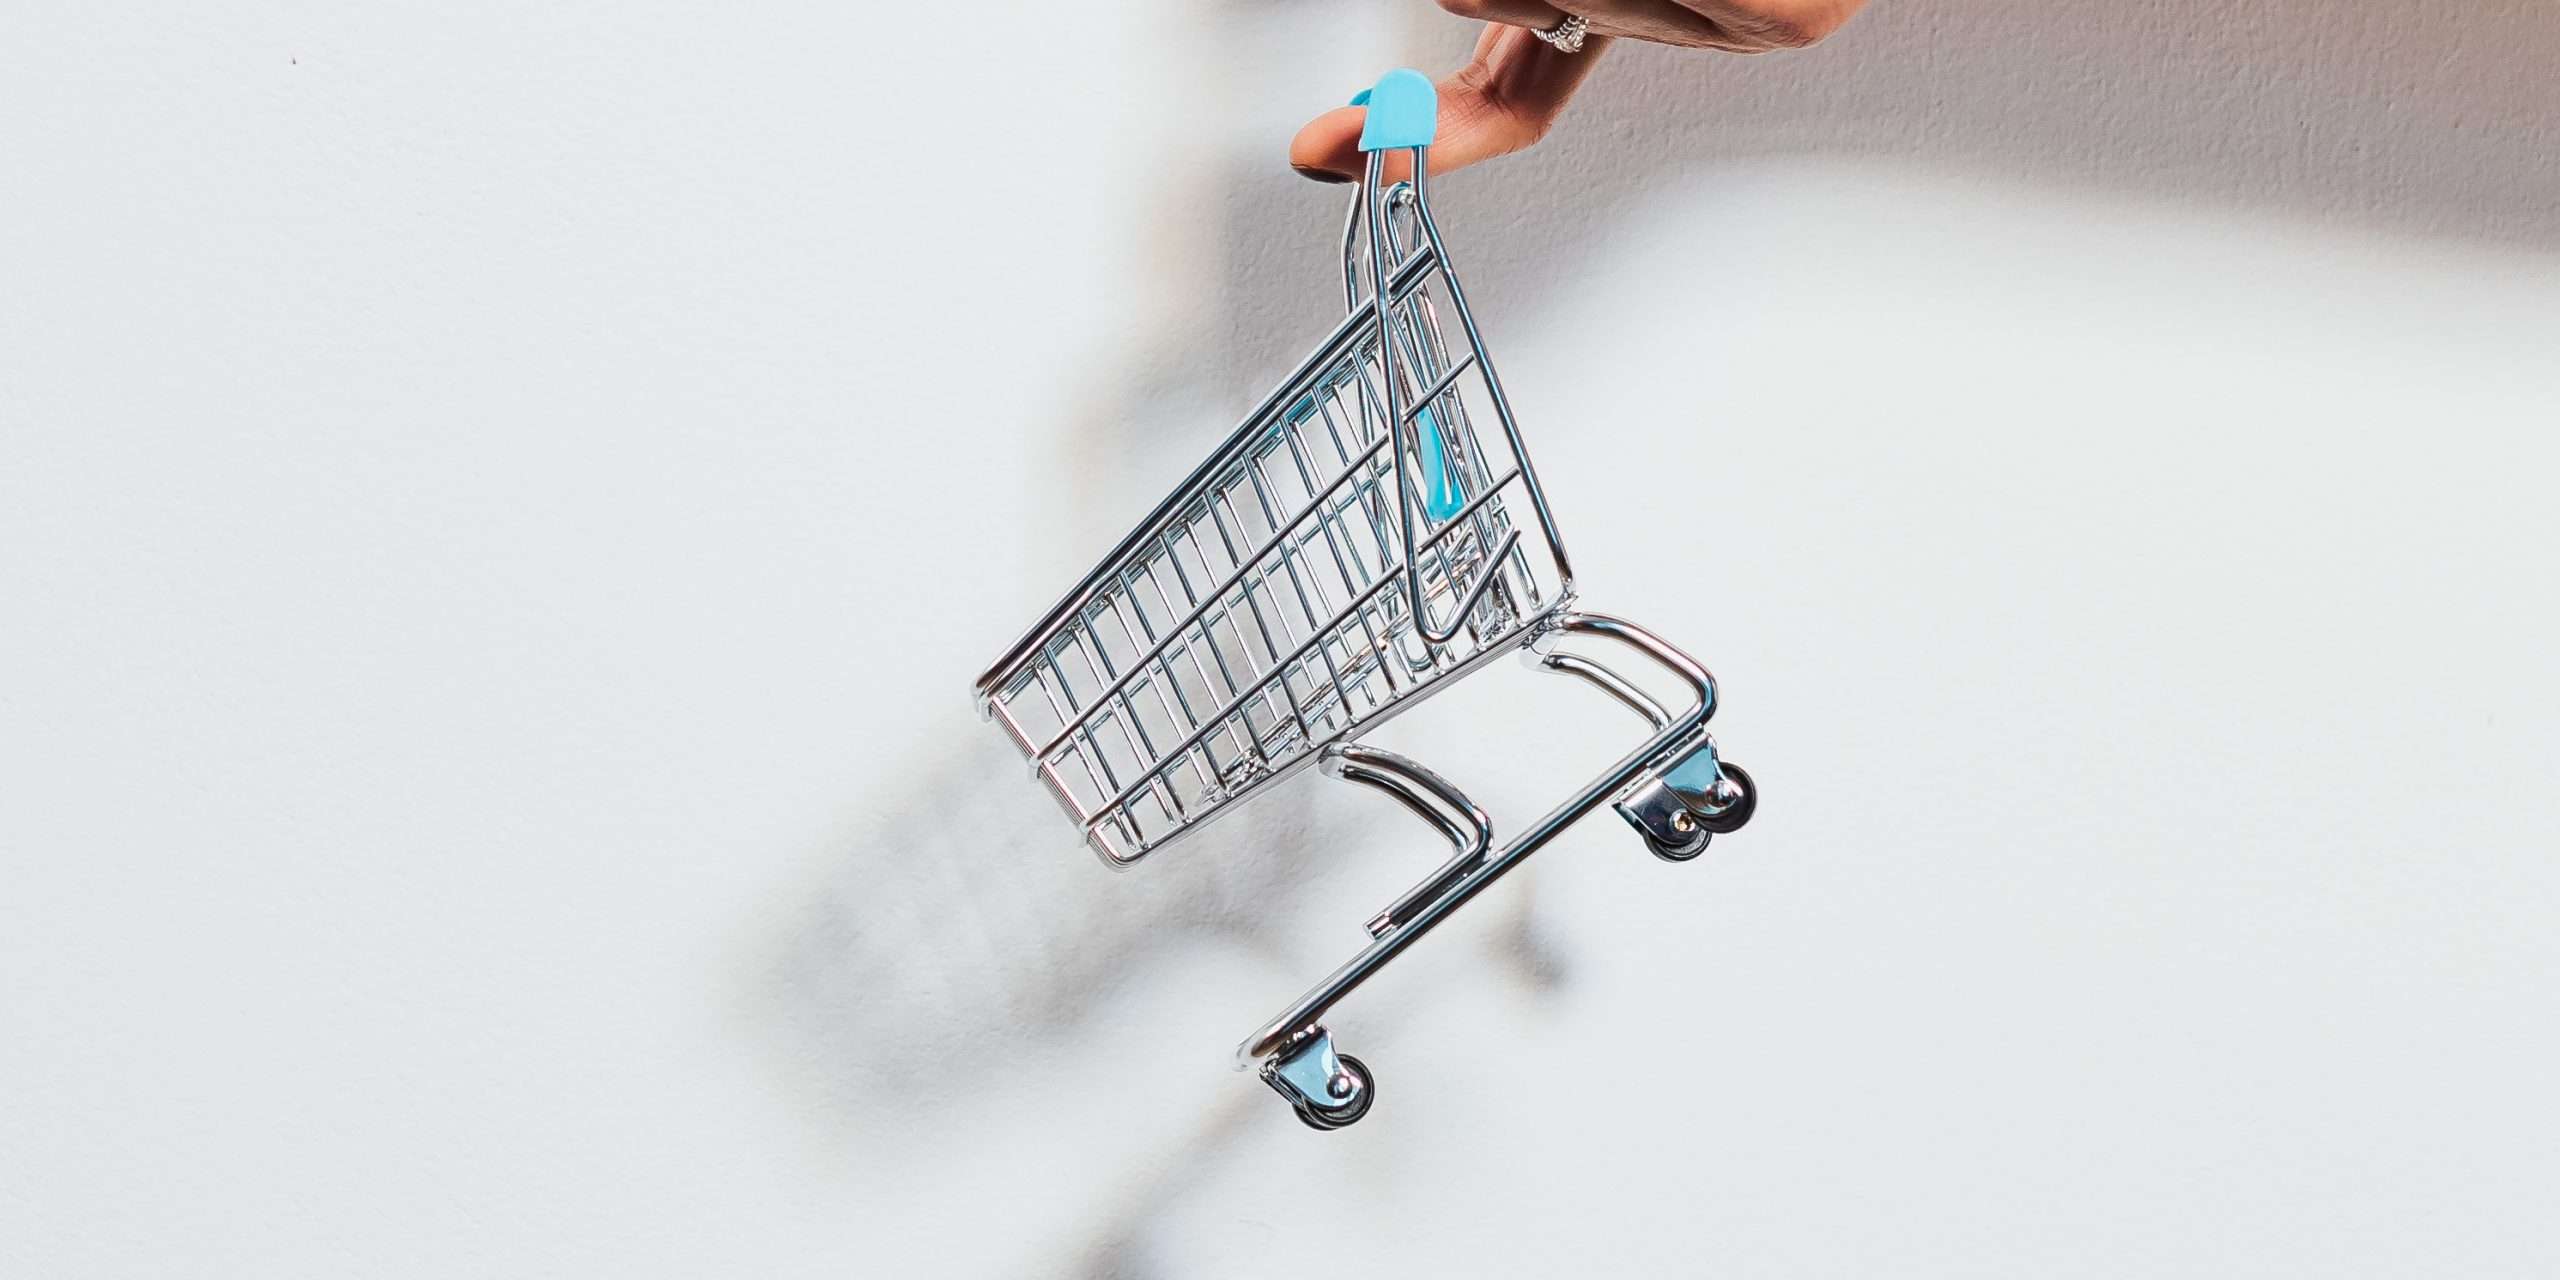 mini shopping cart